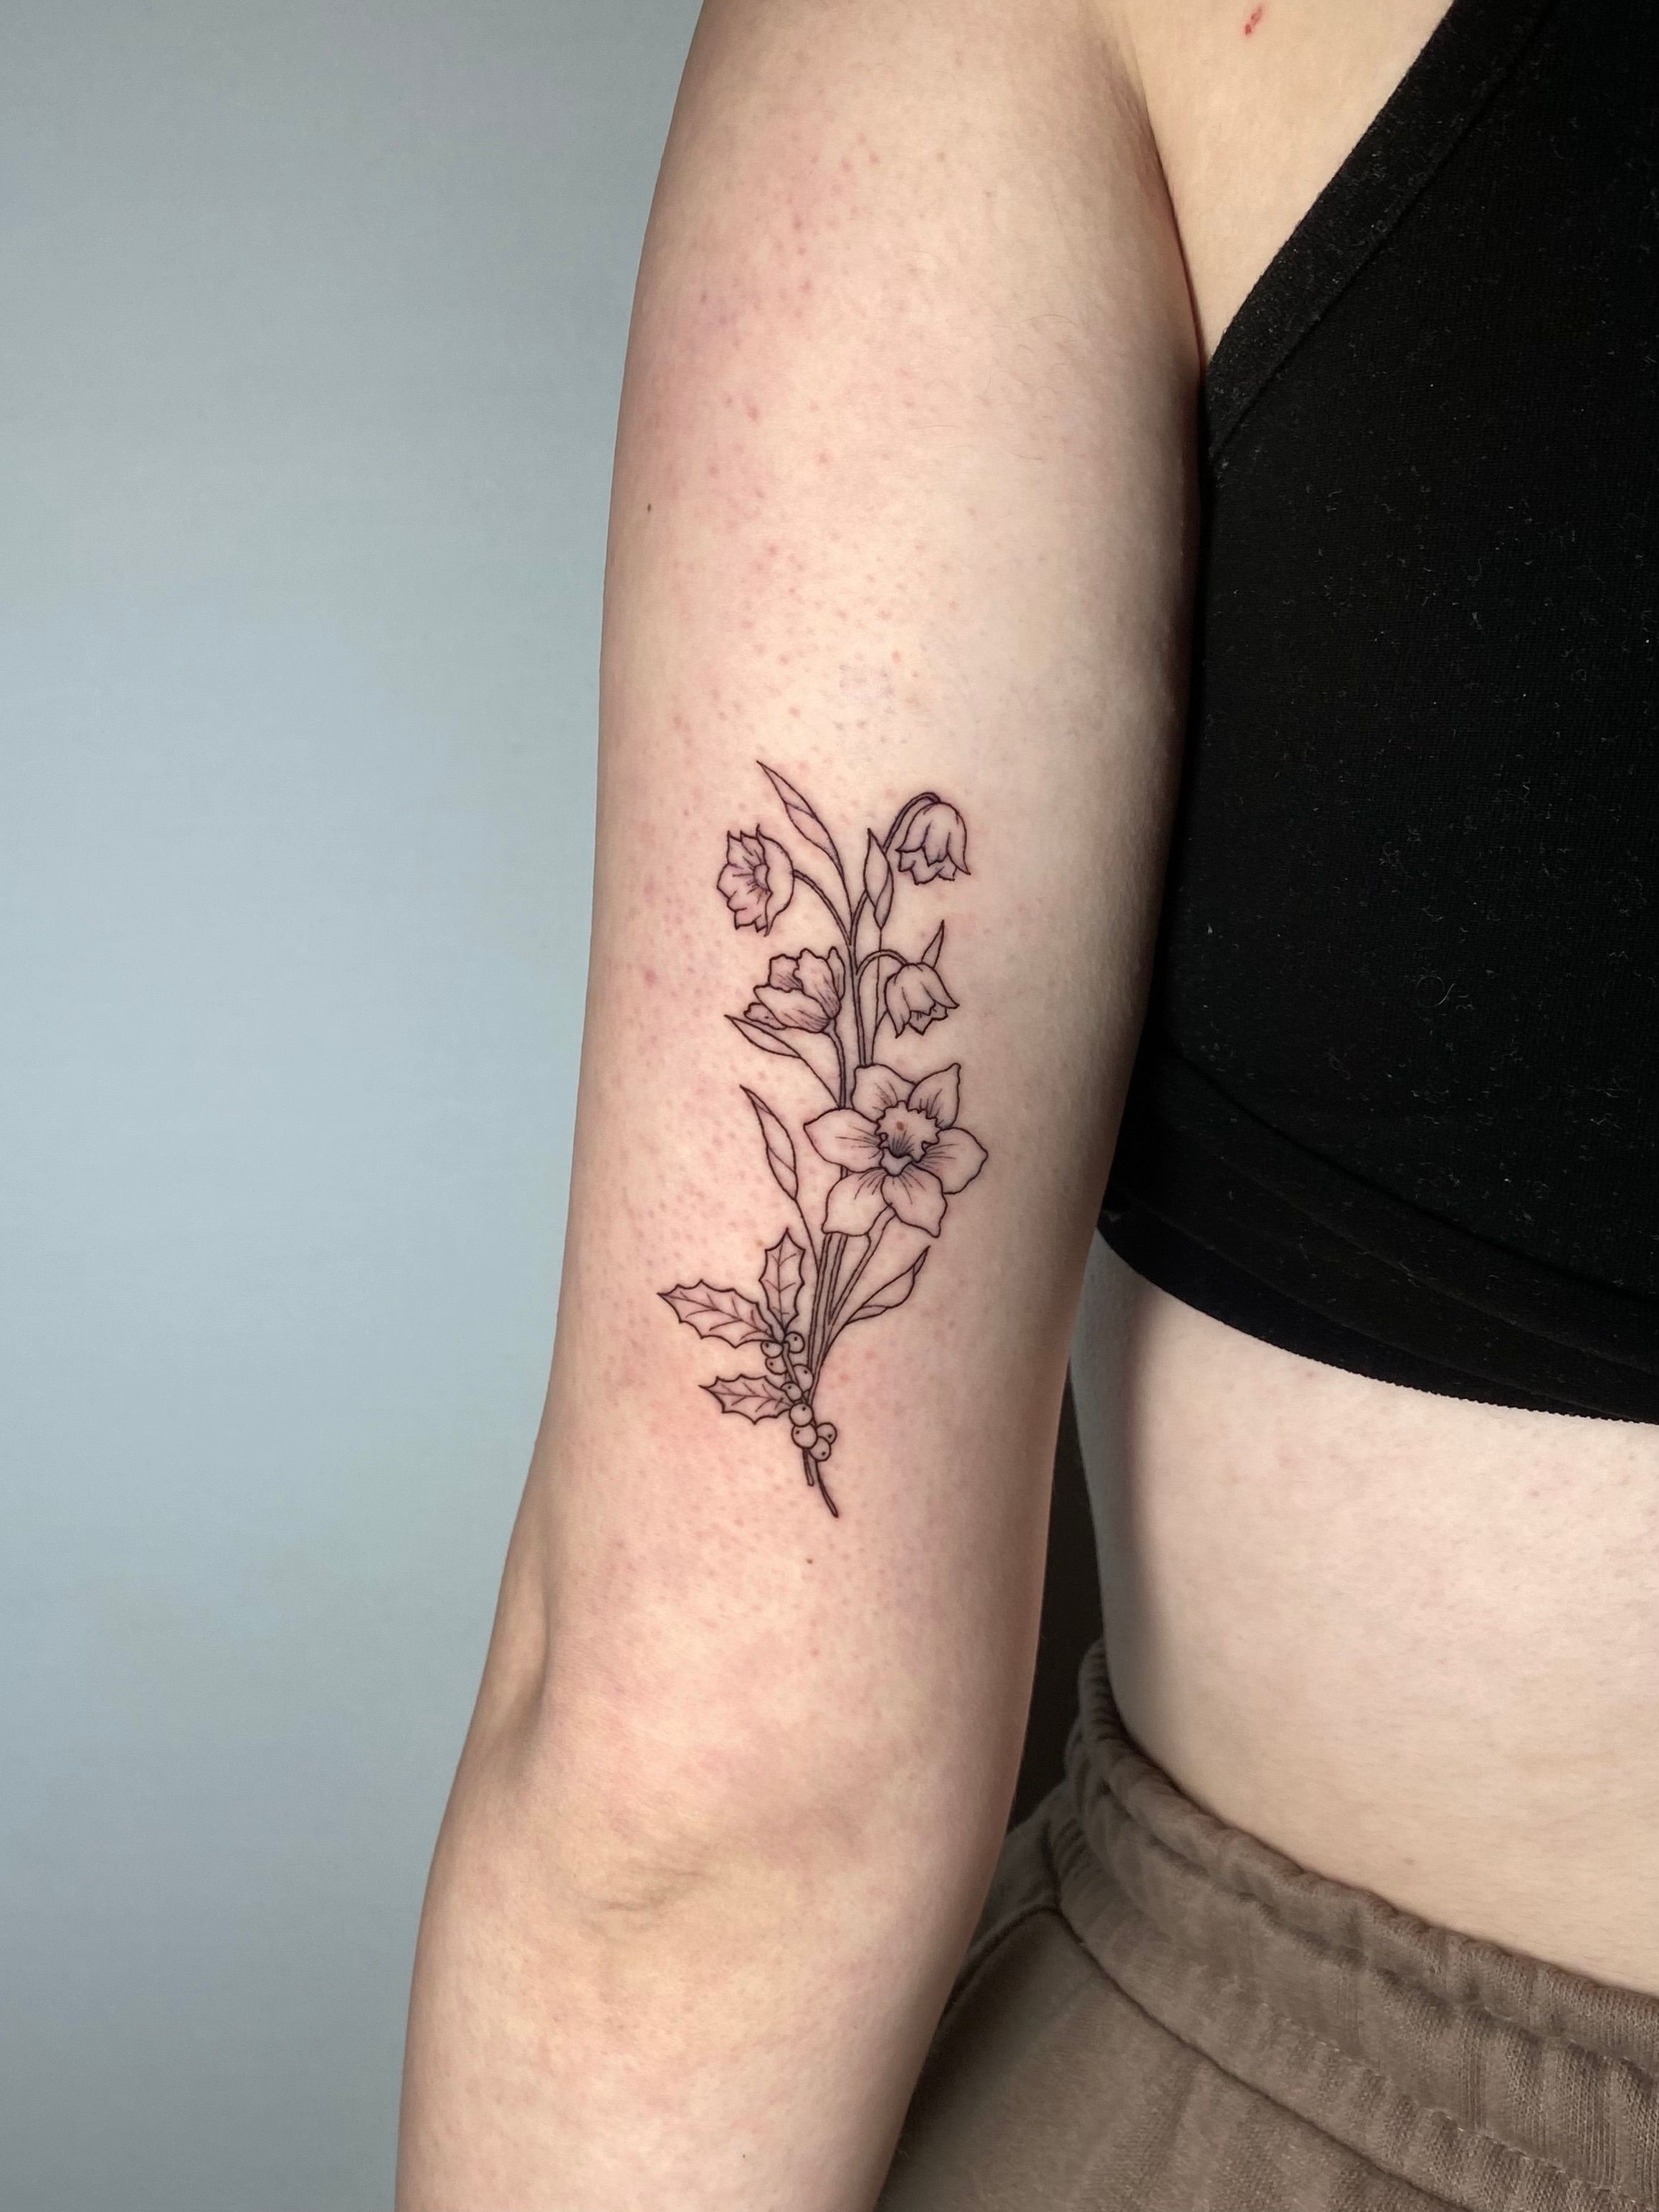 Family Birth Flower Bouquet Tattoo - Birth Flower Tattoo 1 by Birth Flower  Tattoo on Dribbble